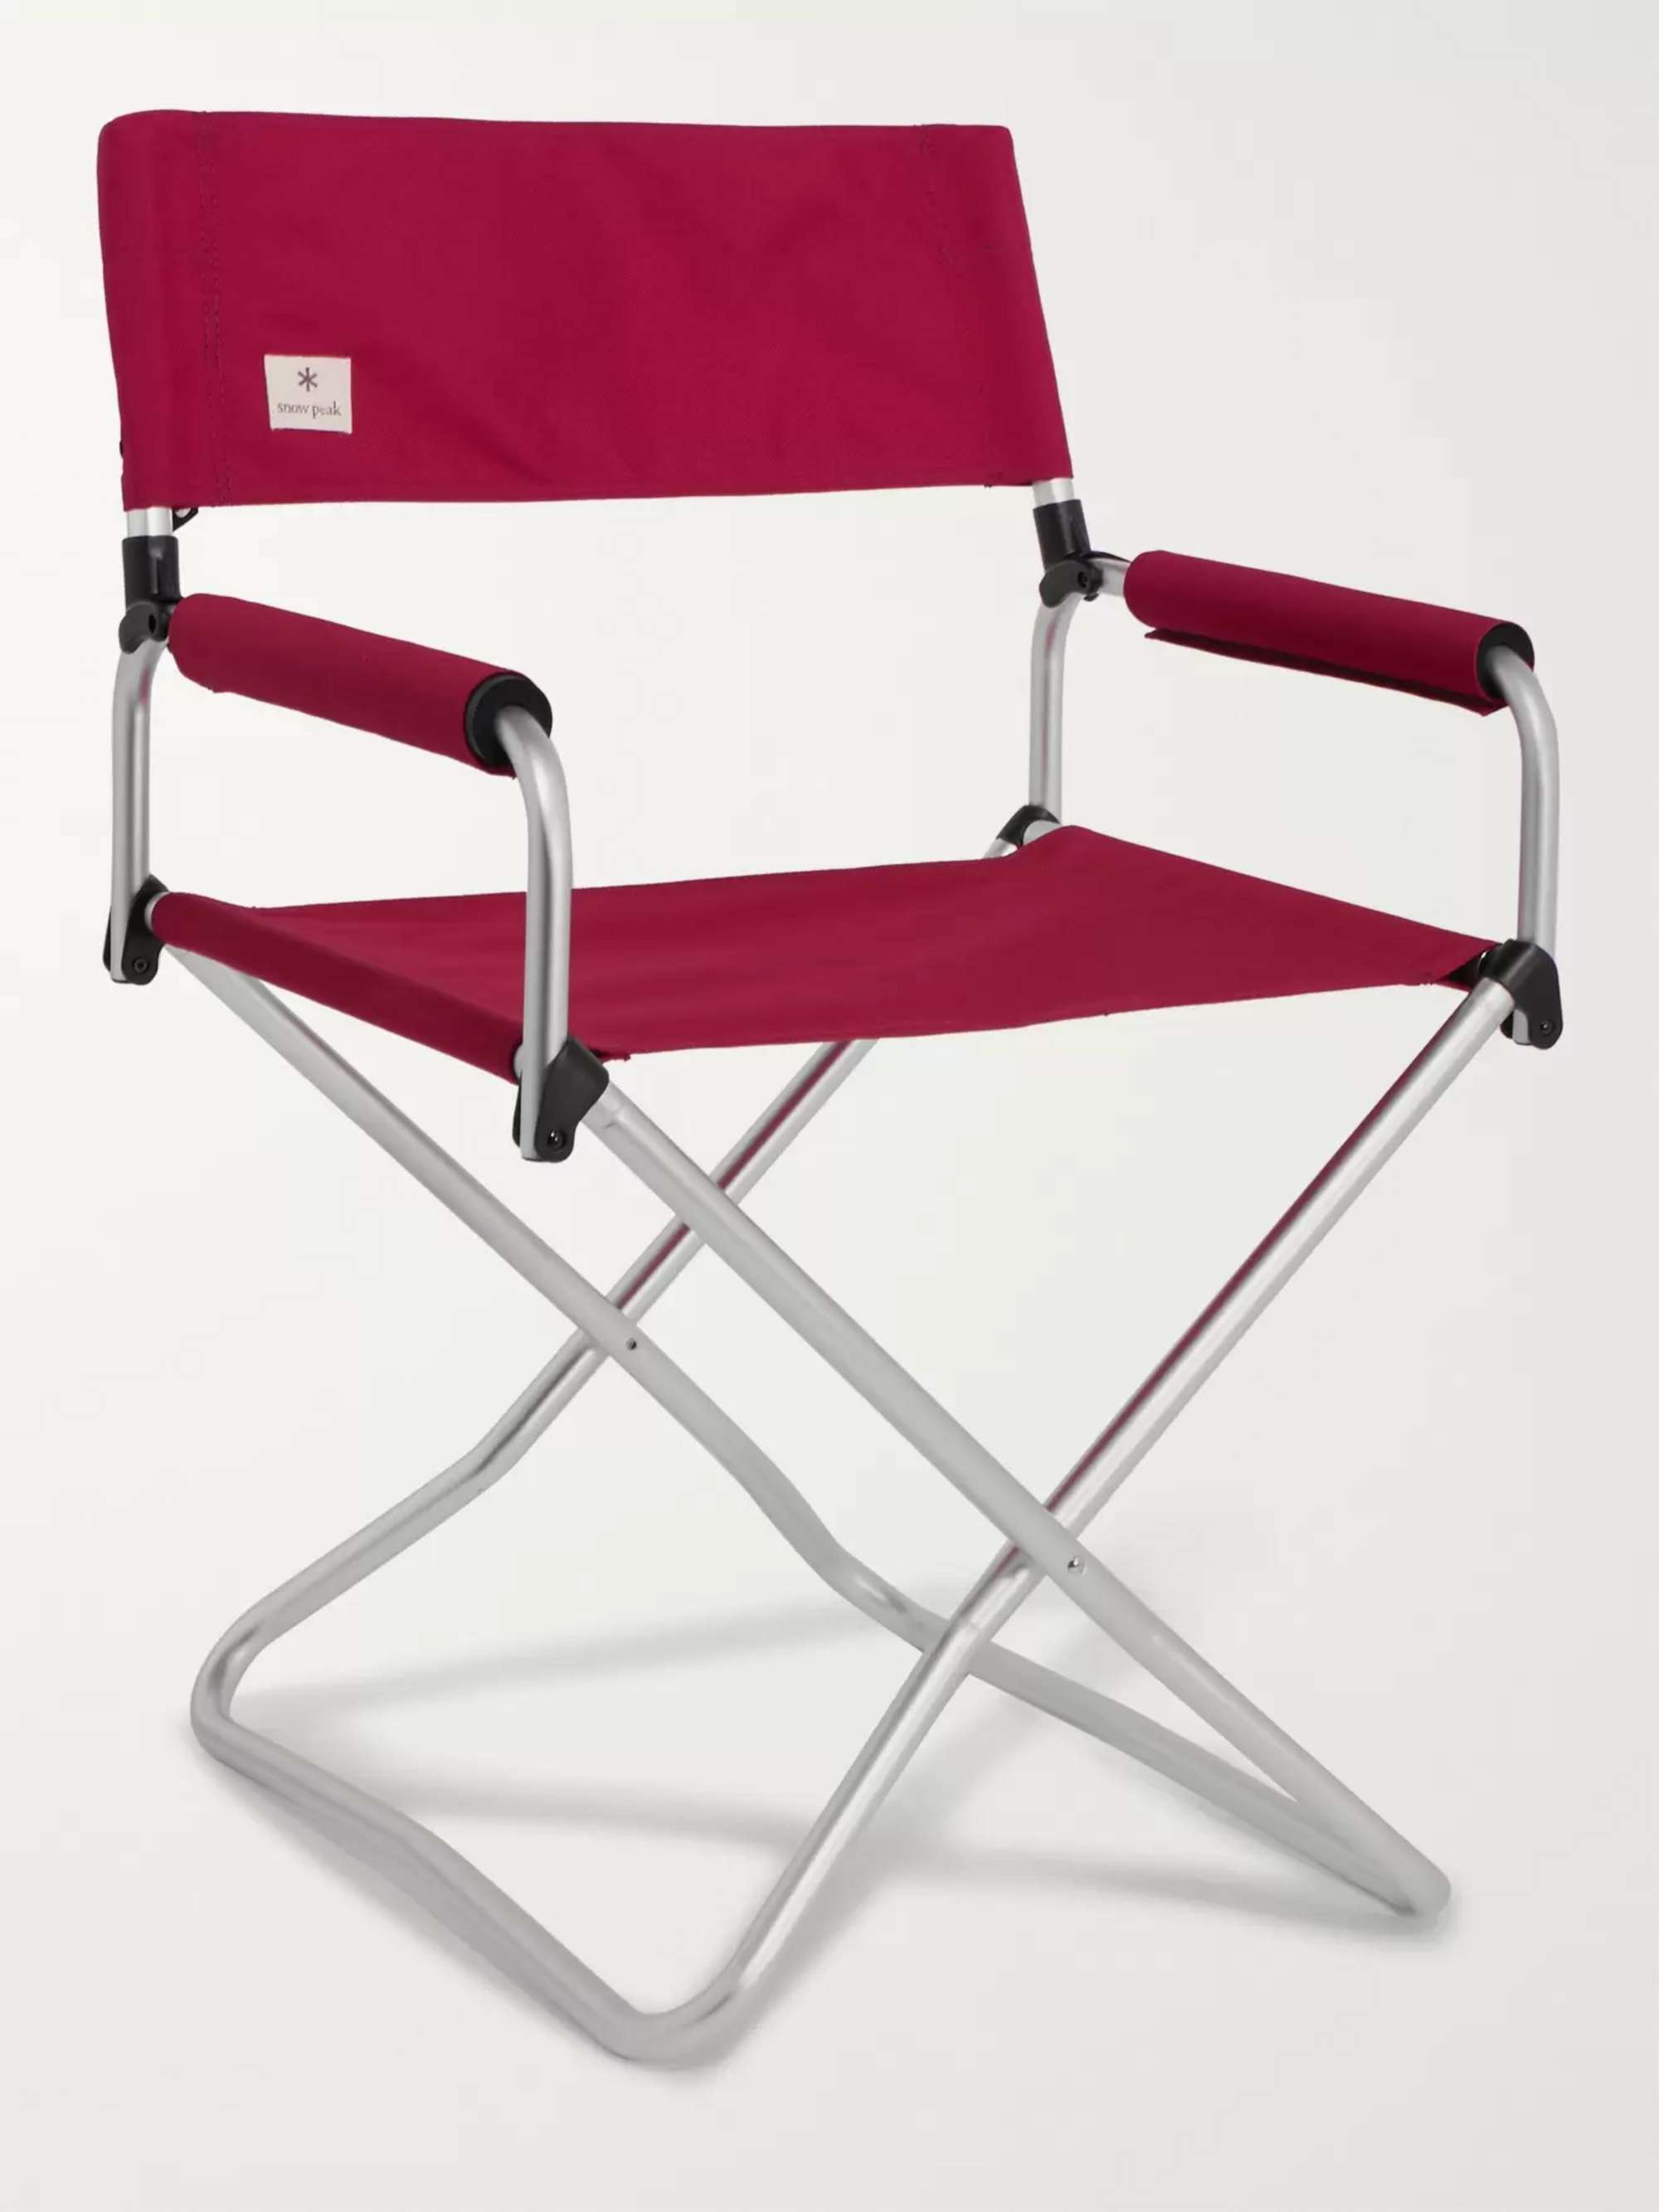 SNOW PEAK Folding Aluminium and Canvas Chair for Men | MR PORTER